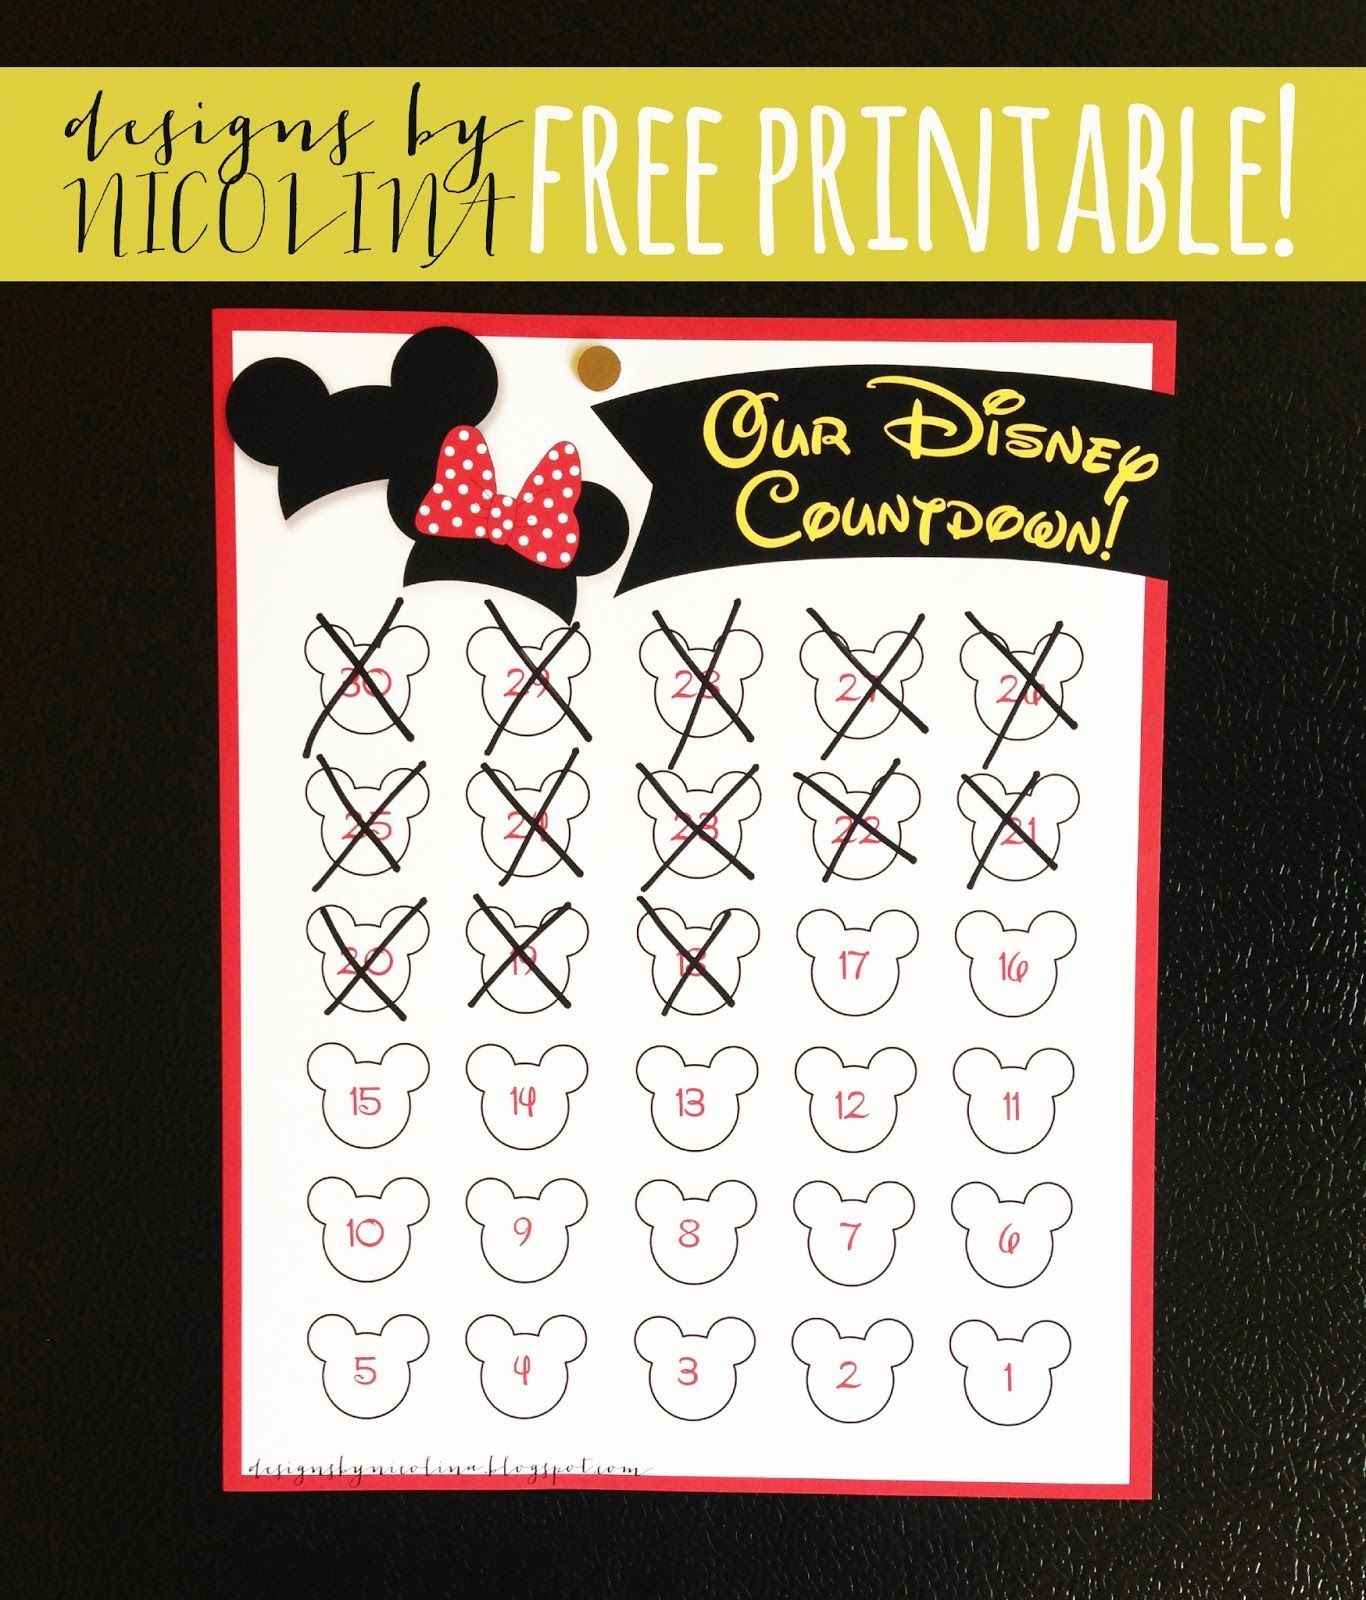 Designsnicolina: Disney Countdown! /// Free Printable